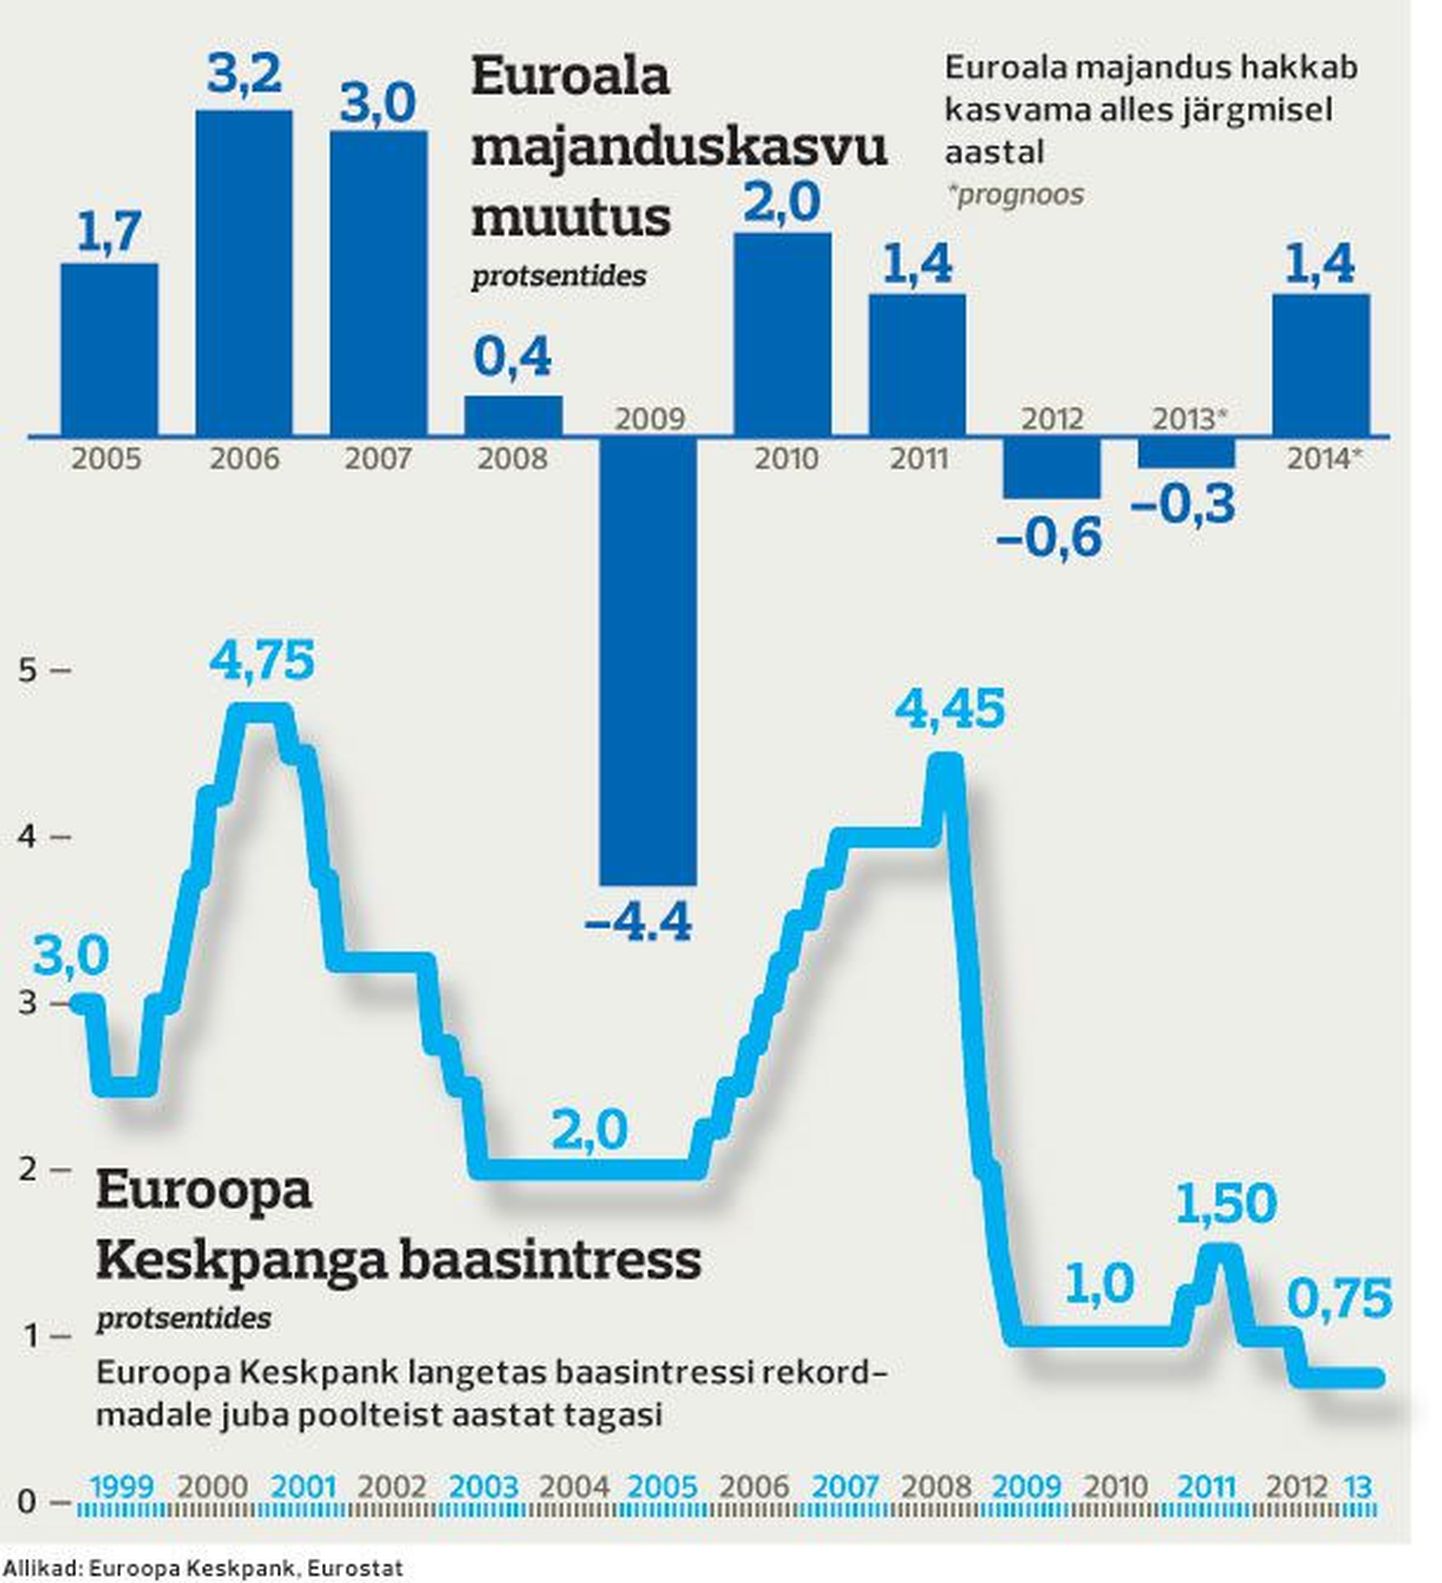 Euroala majanduskasvu muutus.